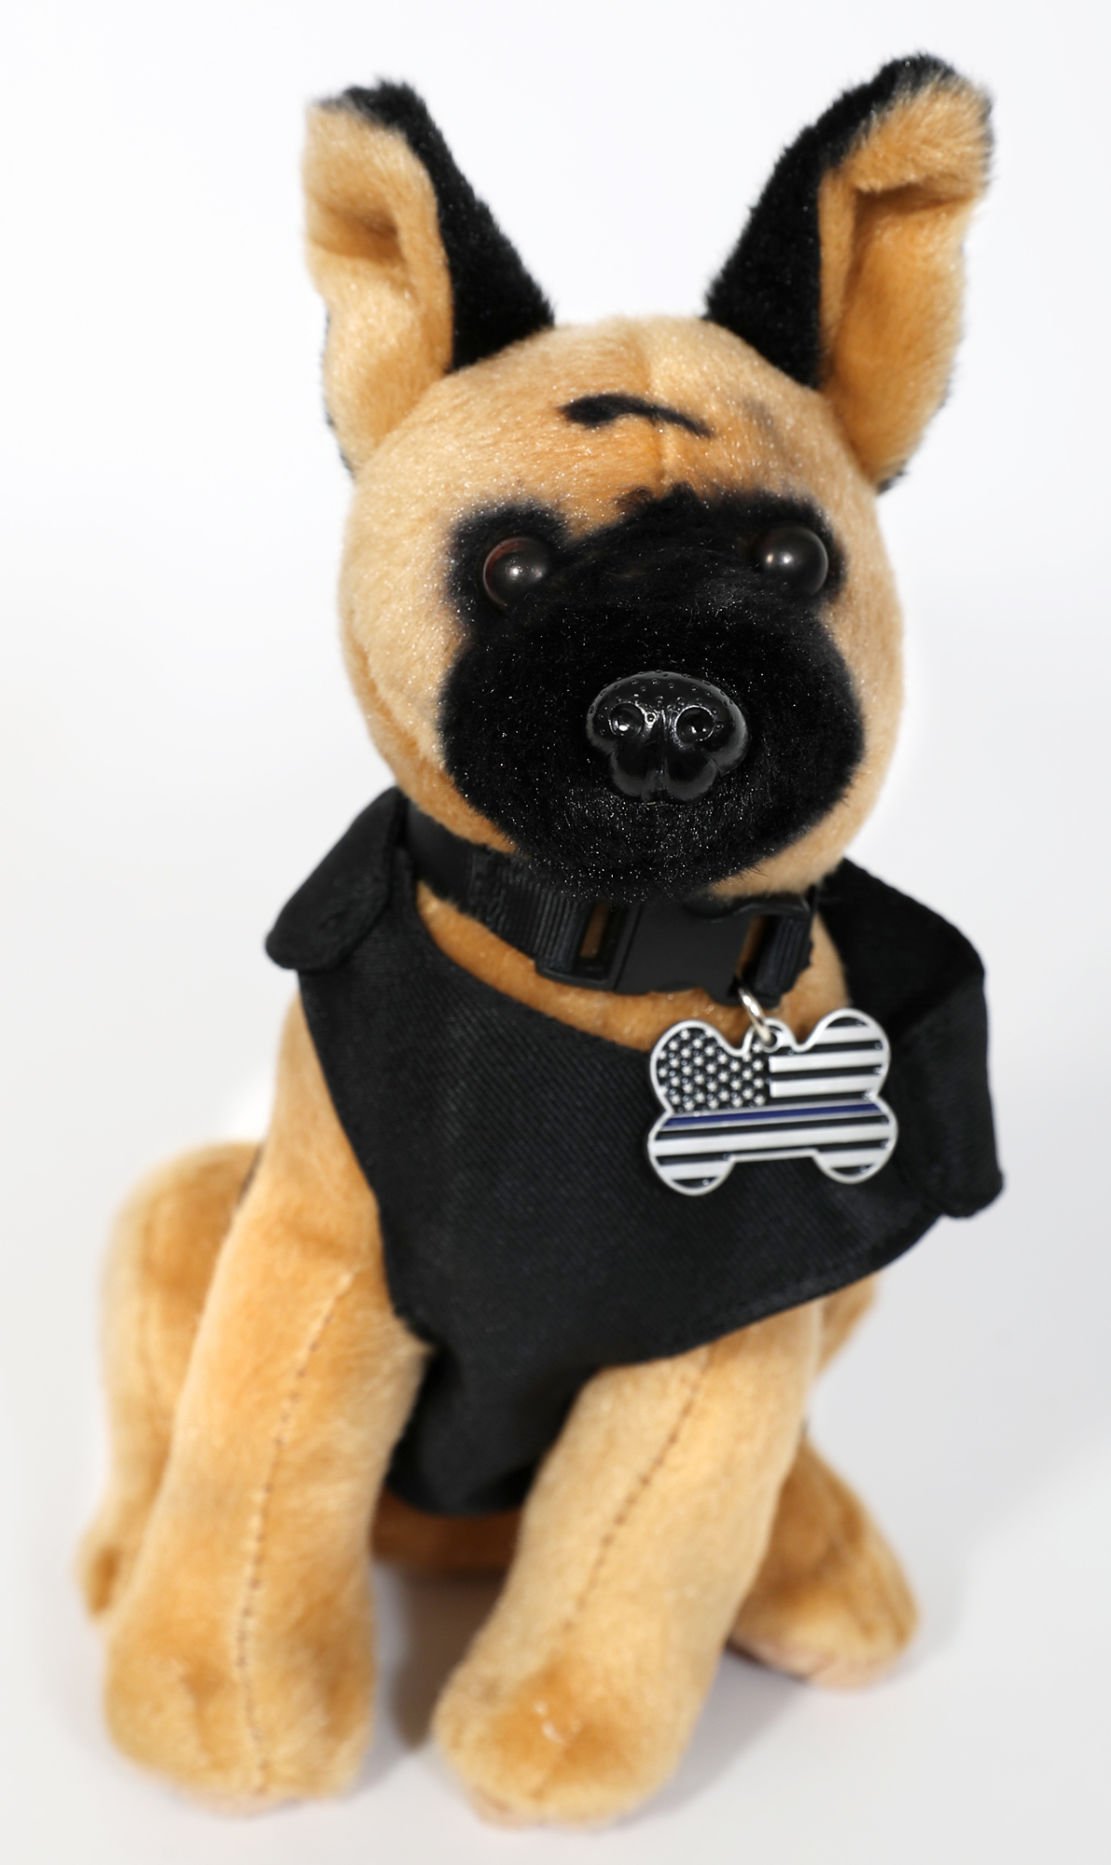 police k9 stuffed animal